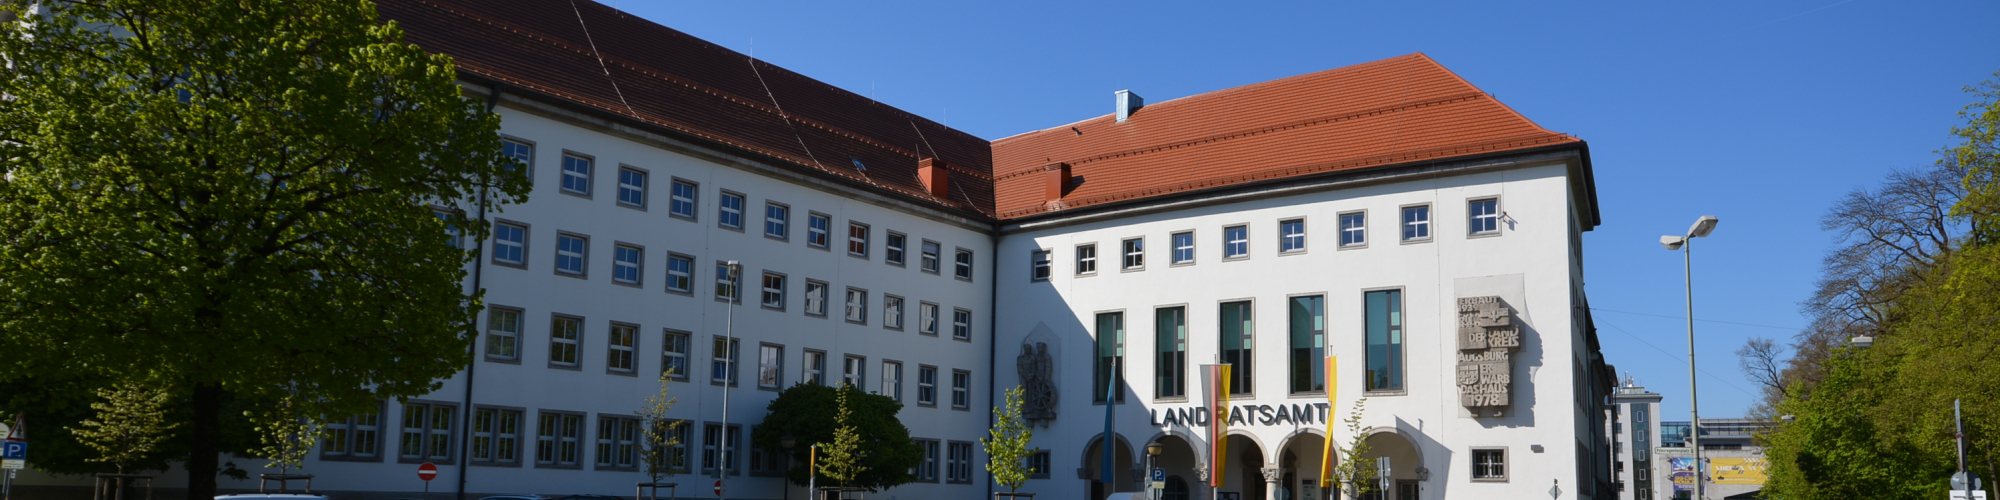 Landratsamt Augsburg 